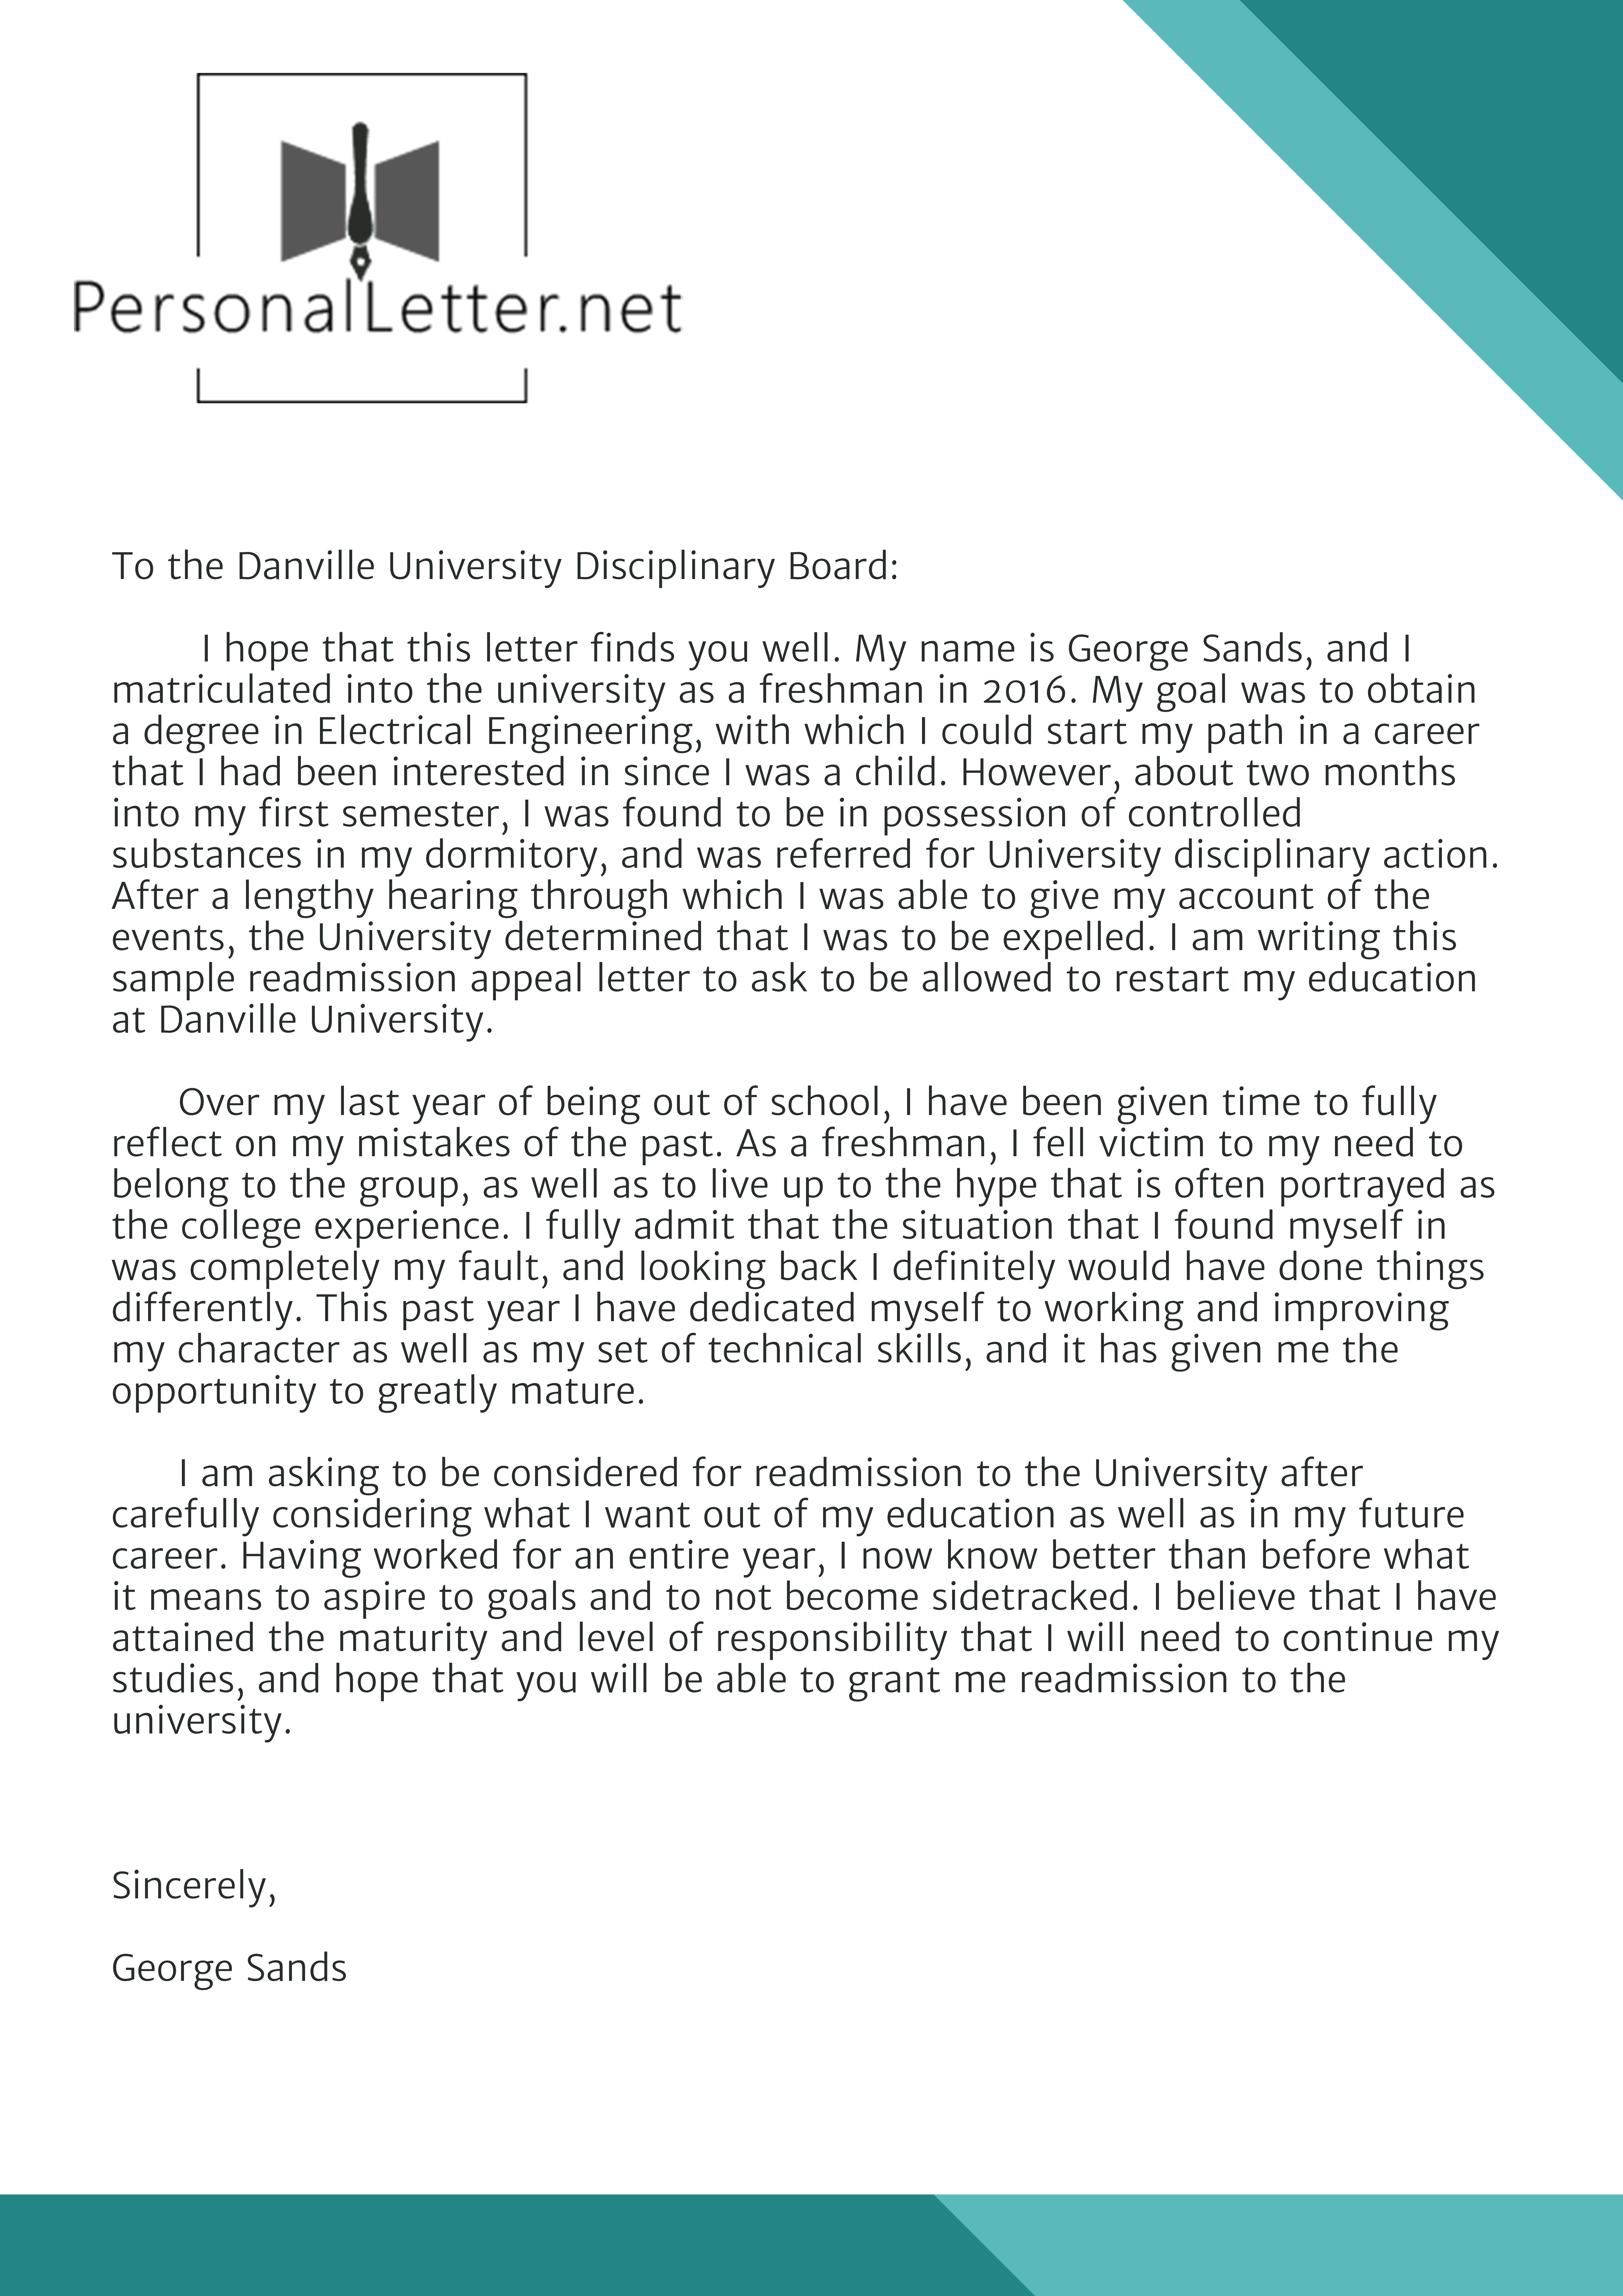 Grade Appeal Letter Example from www.personalletter.net